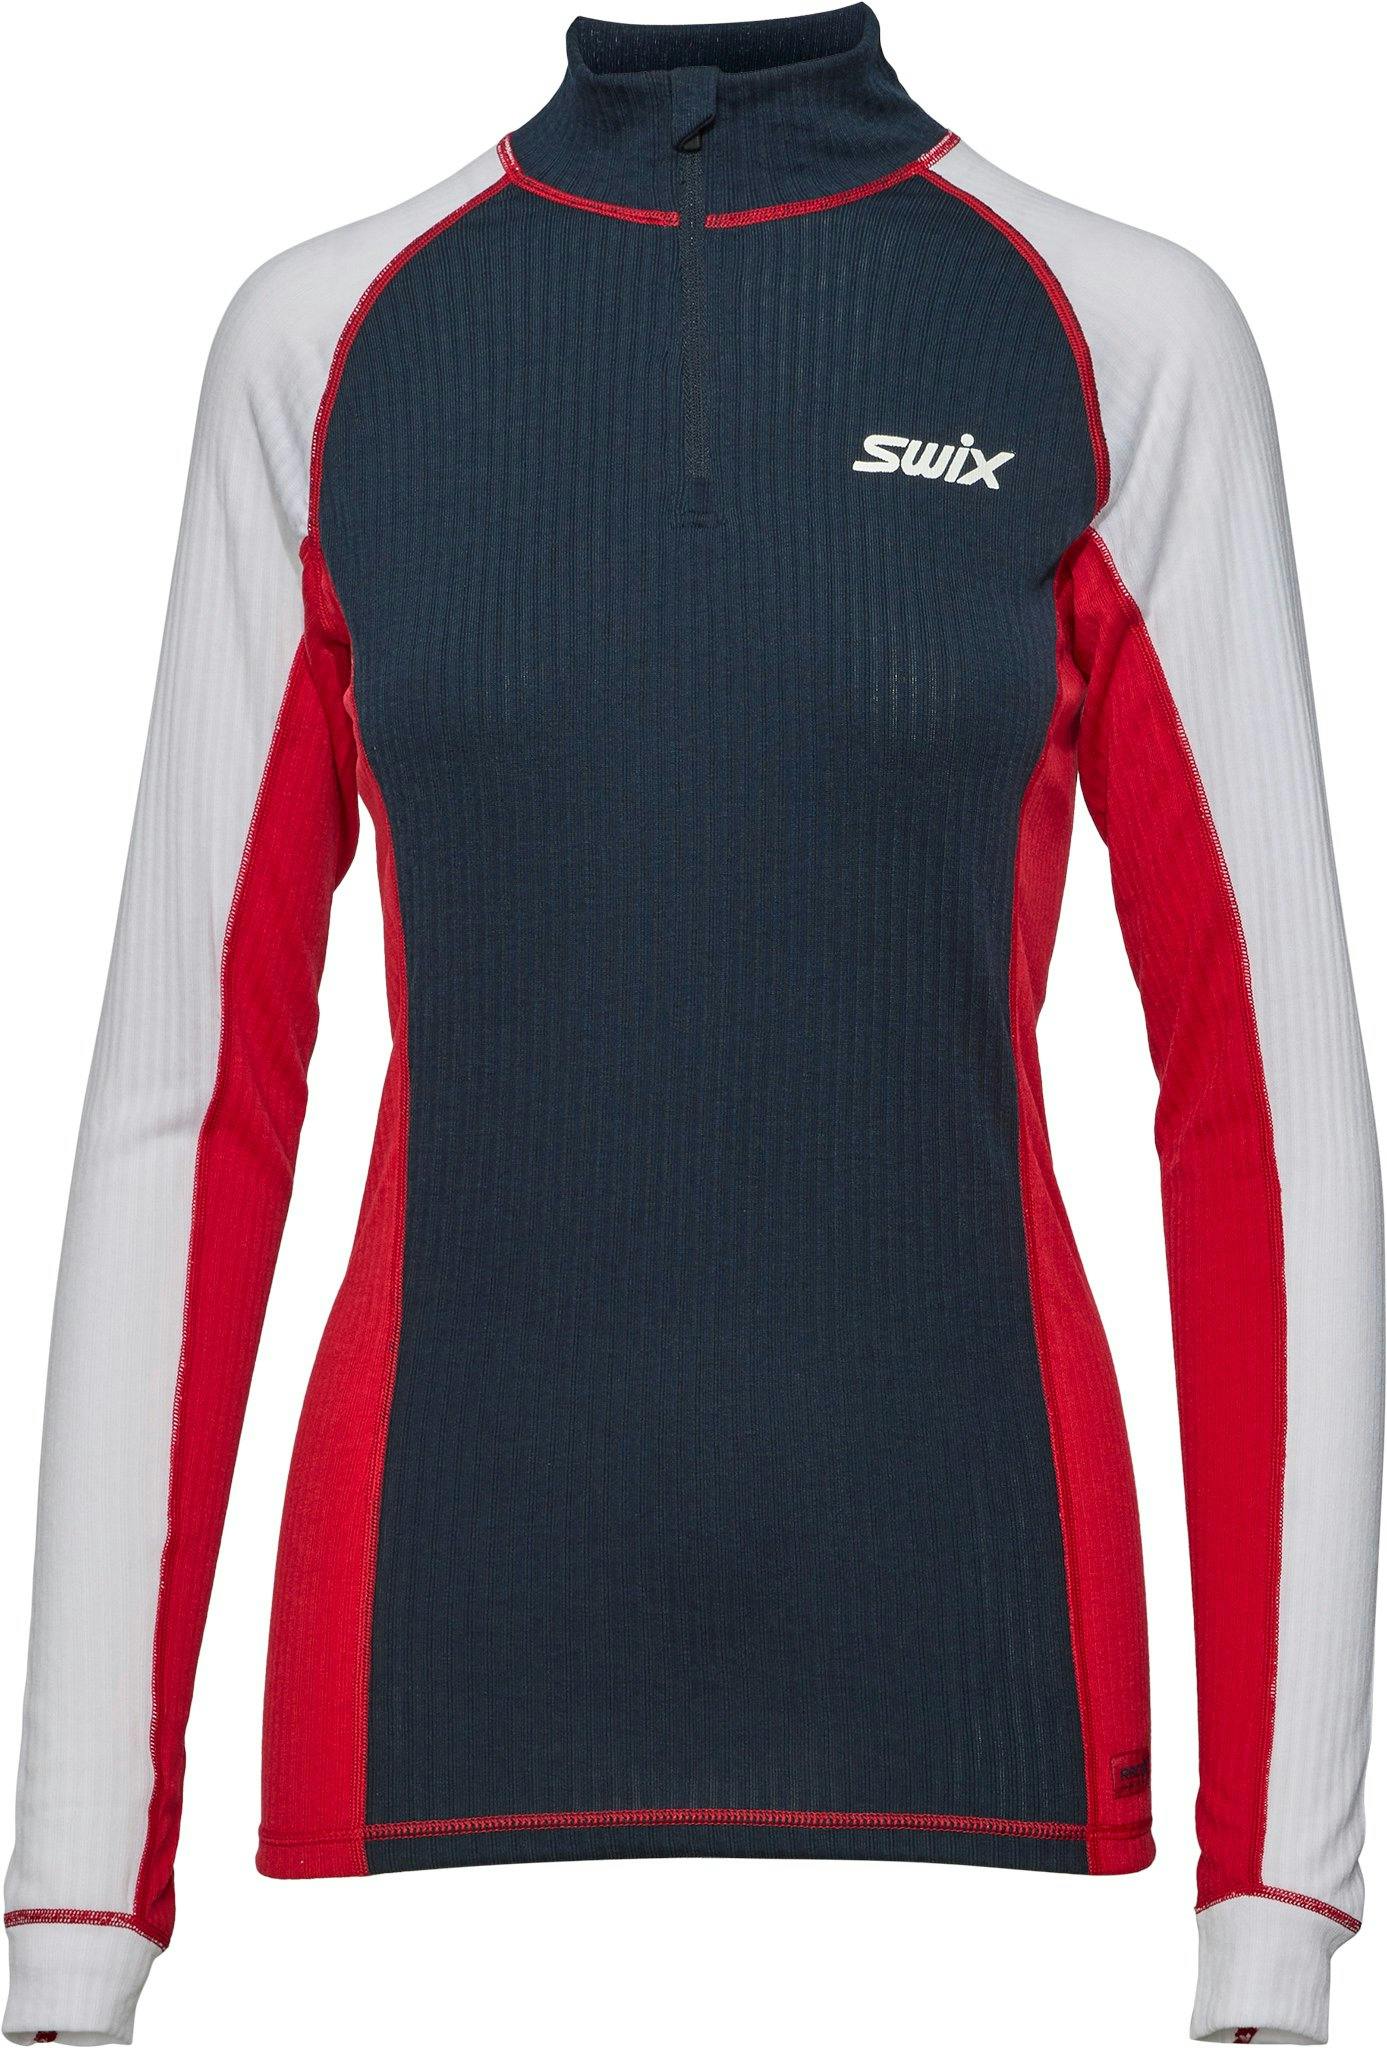 Product image for RaceX Bodywear Half Zip Jersey - Men's